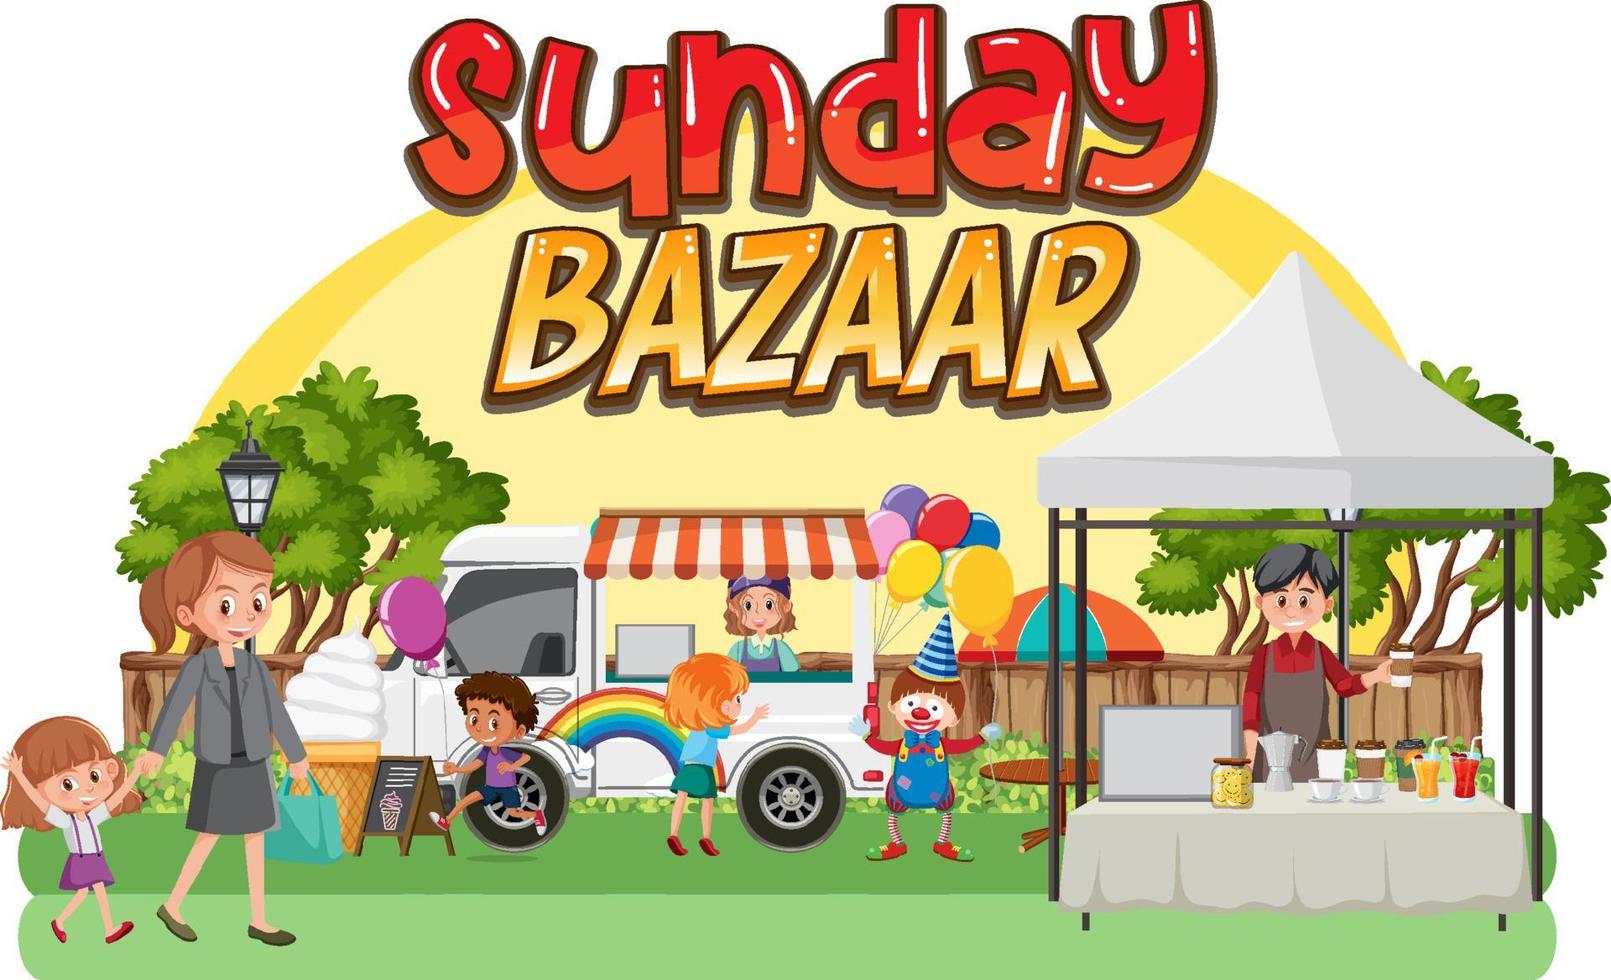 Flea market concept with sunday bazaar vector